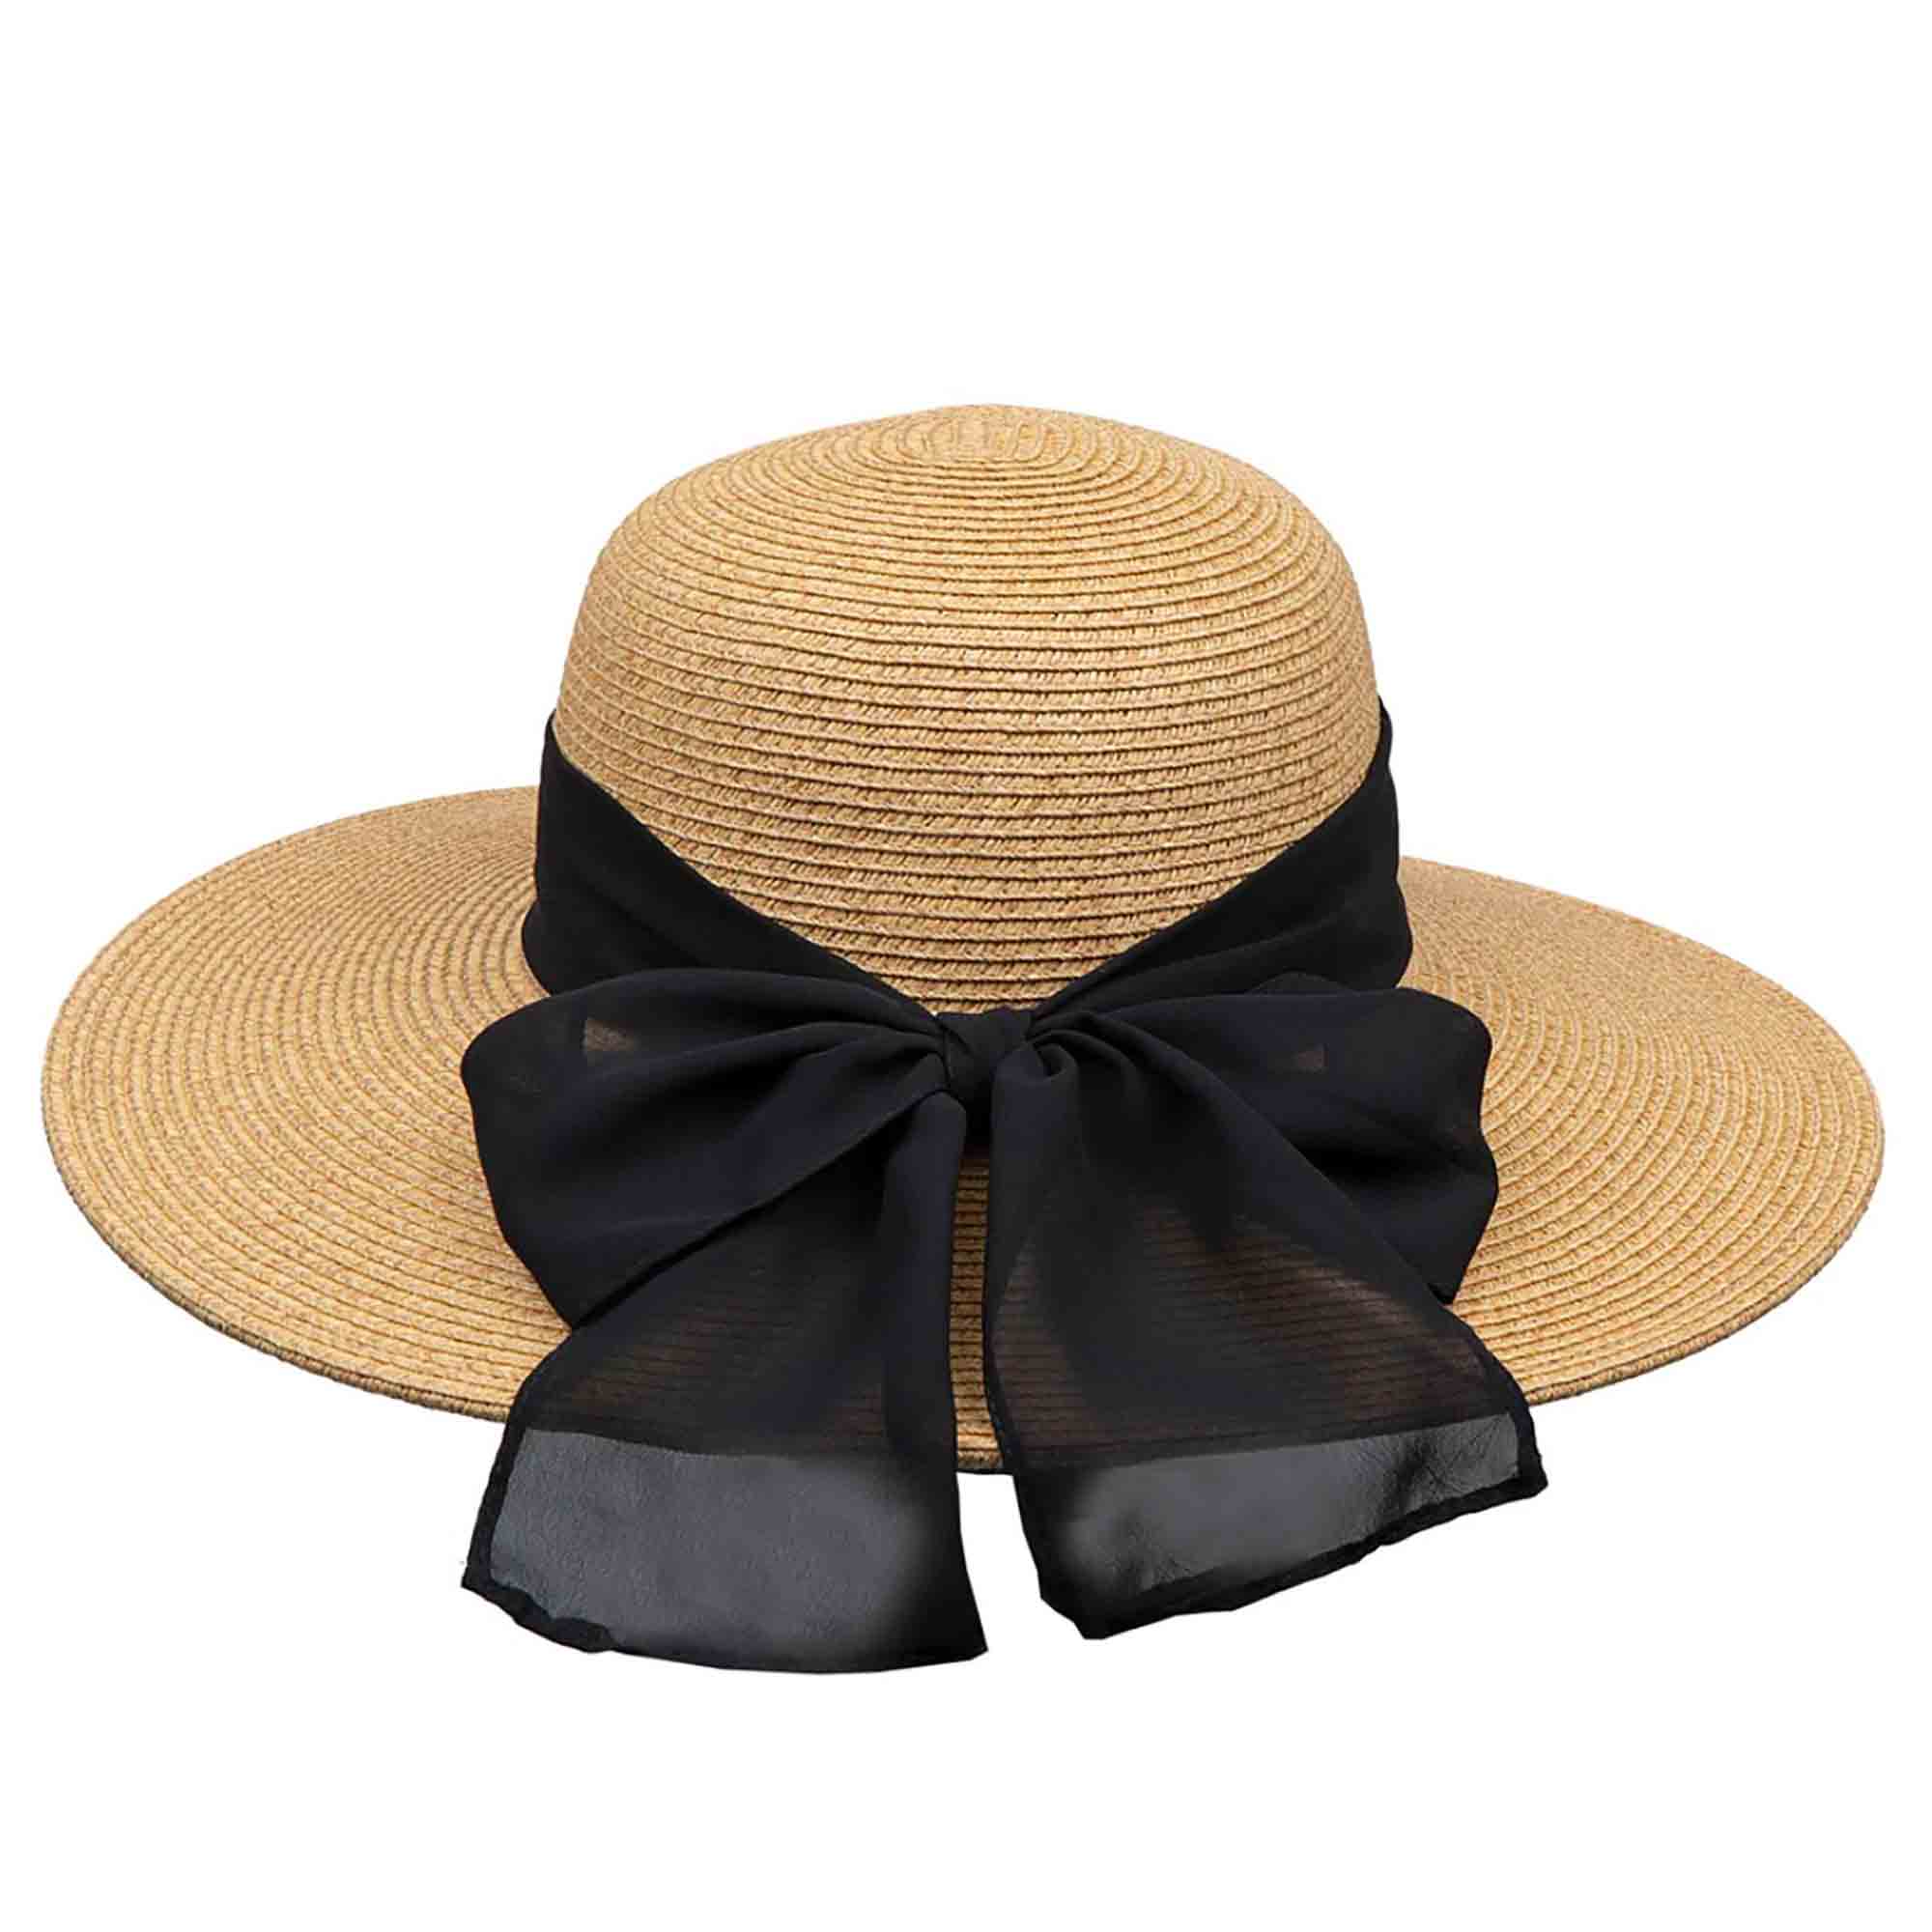 Straw Sun Hat with Chiffon Bow - Karen Keith Hats Wide Brim Sun Hat Great hats by Karen Keith    